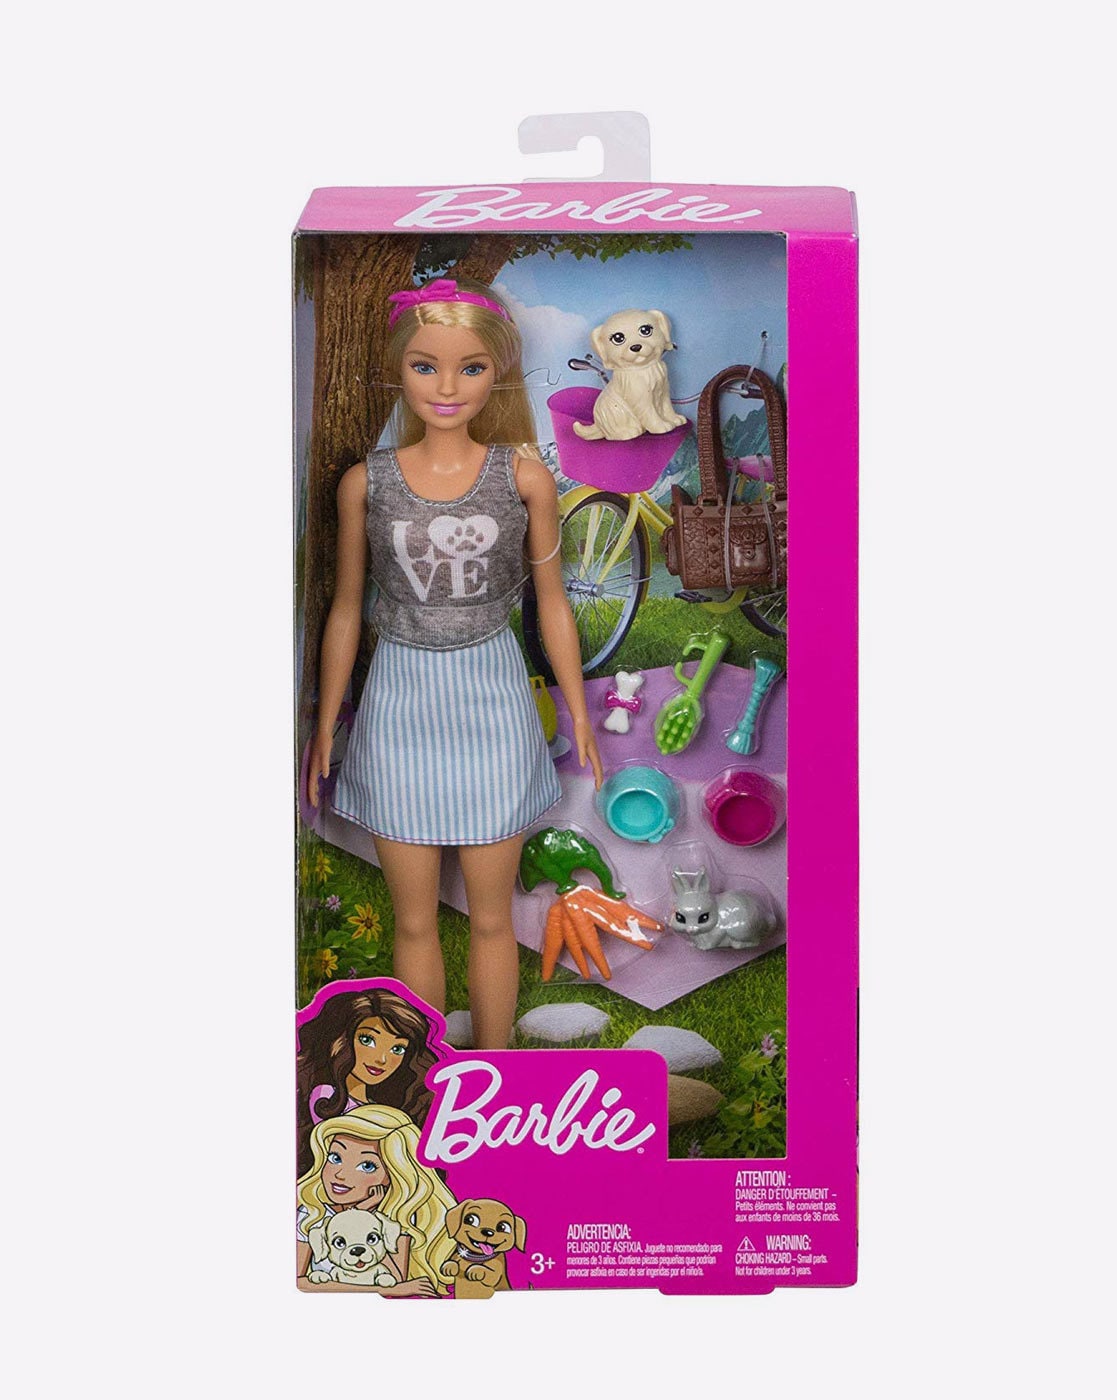 barbie doll images